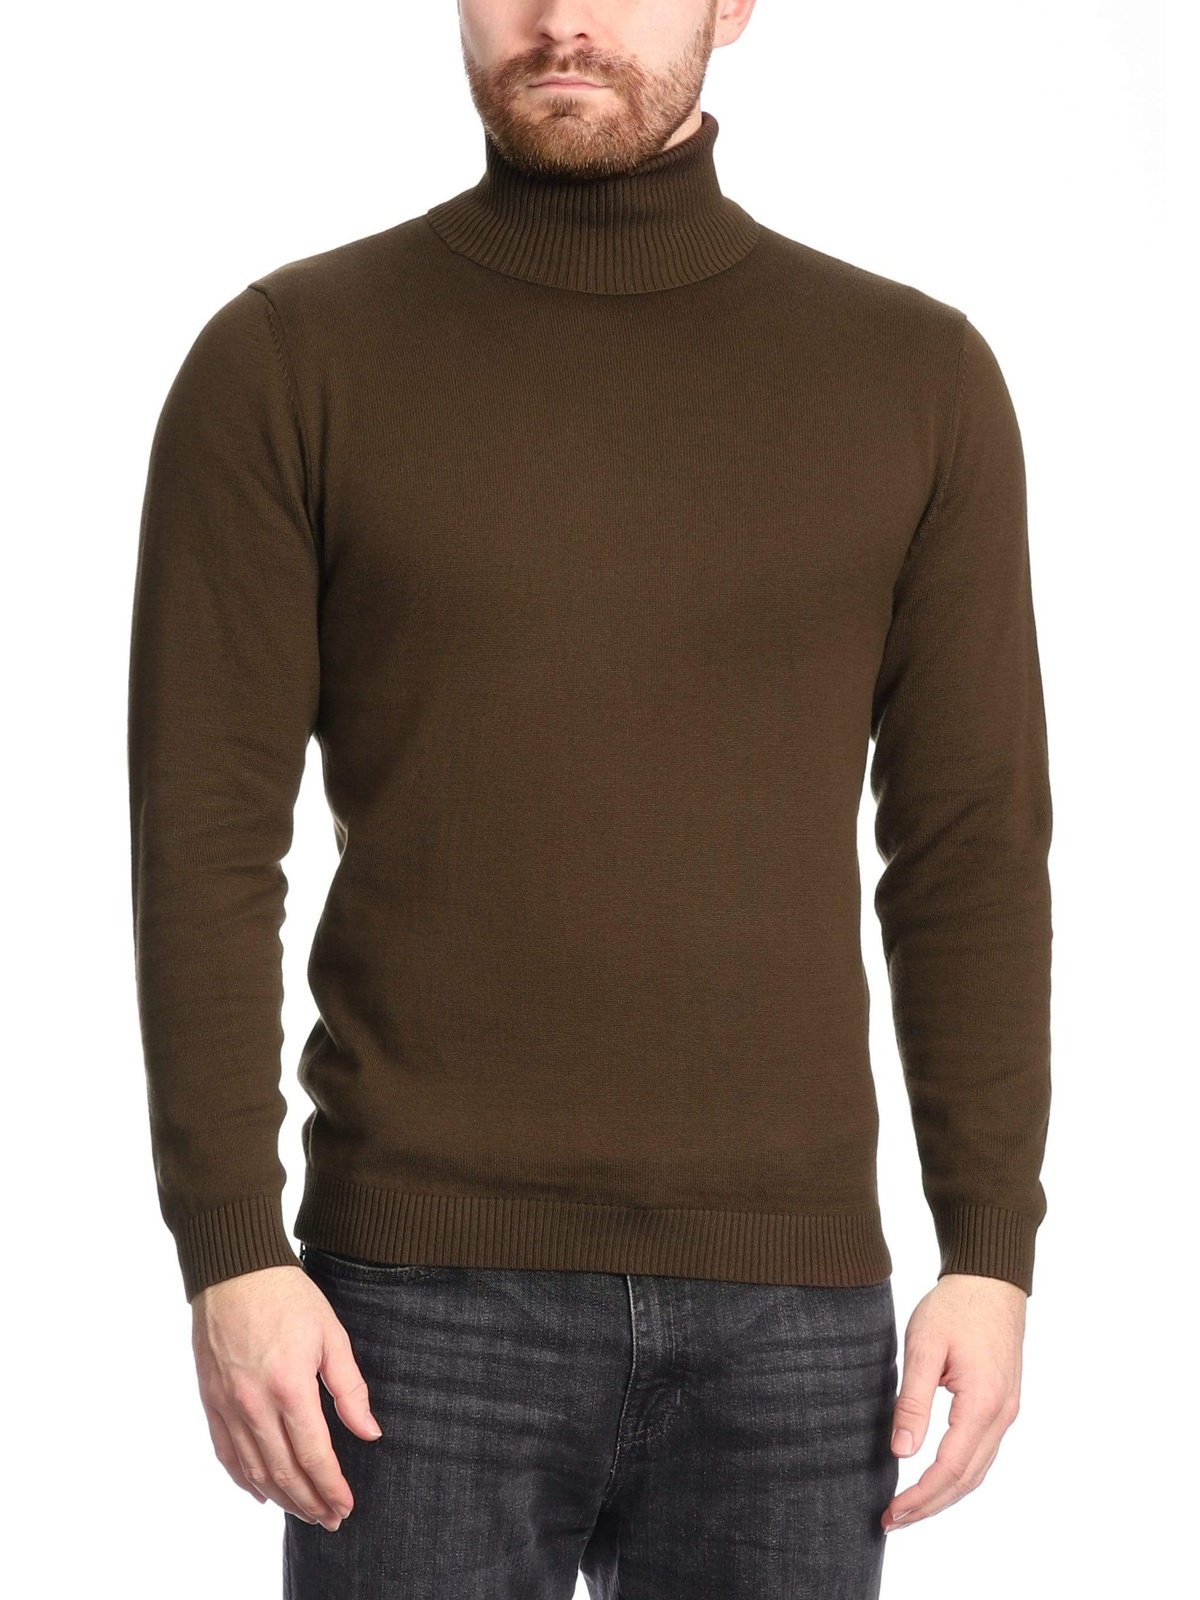 Arthur Black Default Category Migrated Arthur Black Men's Solid Brown Pullover Cotton Blend Turtleneck Sweater Shirt